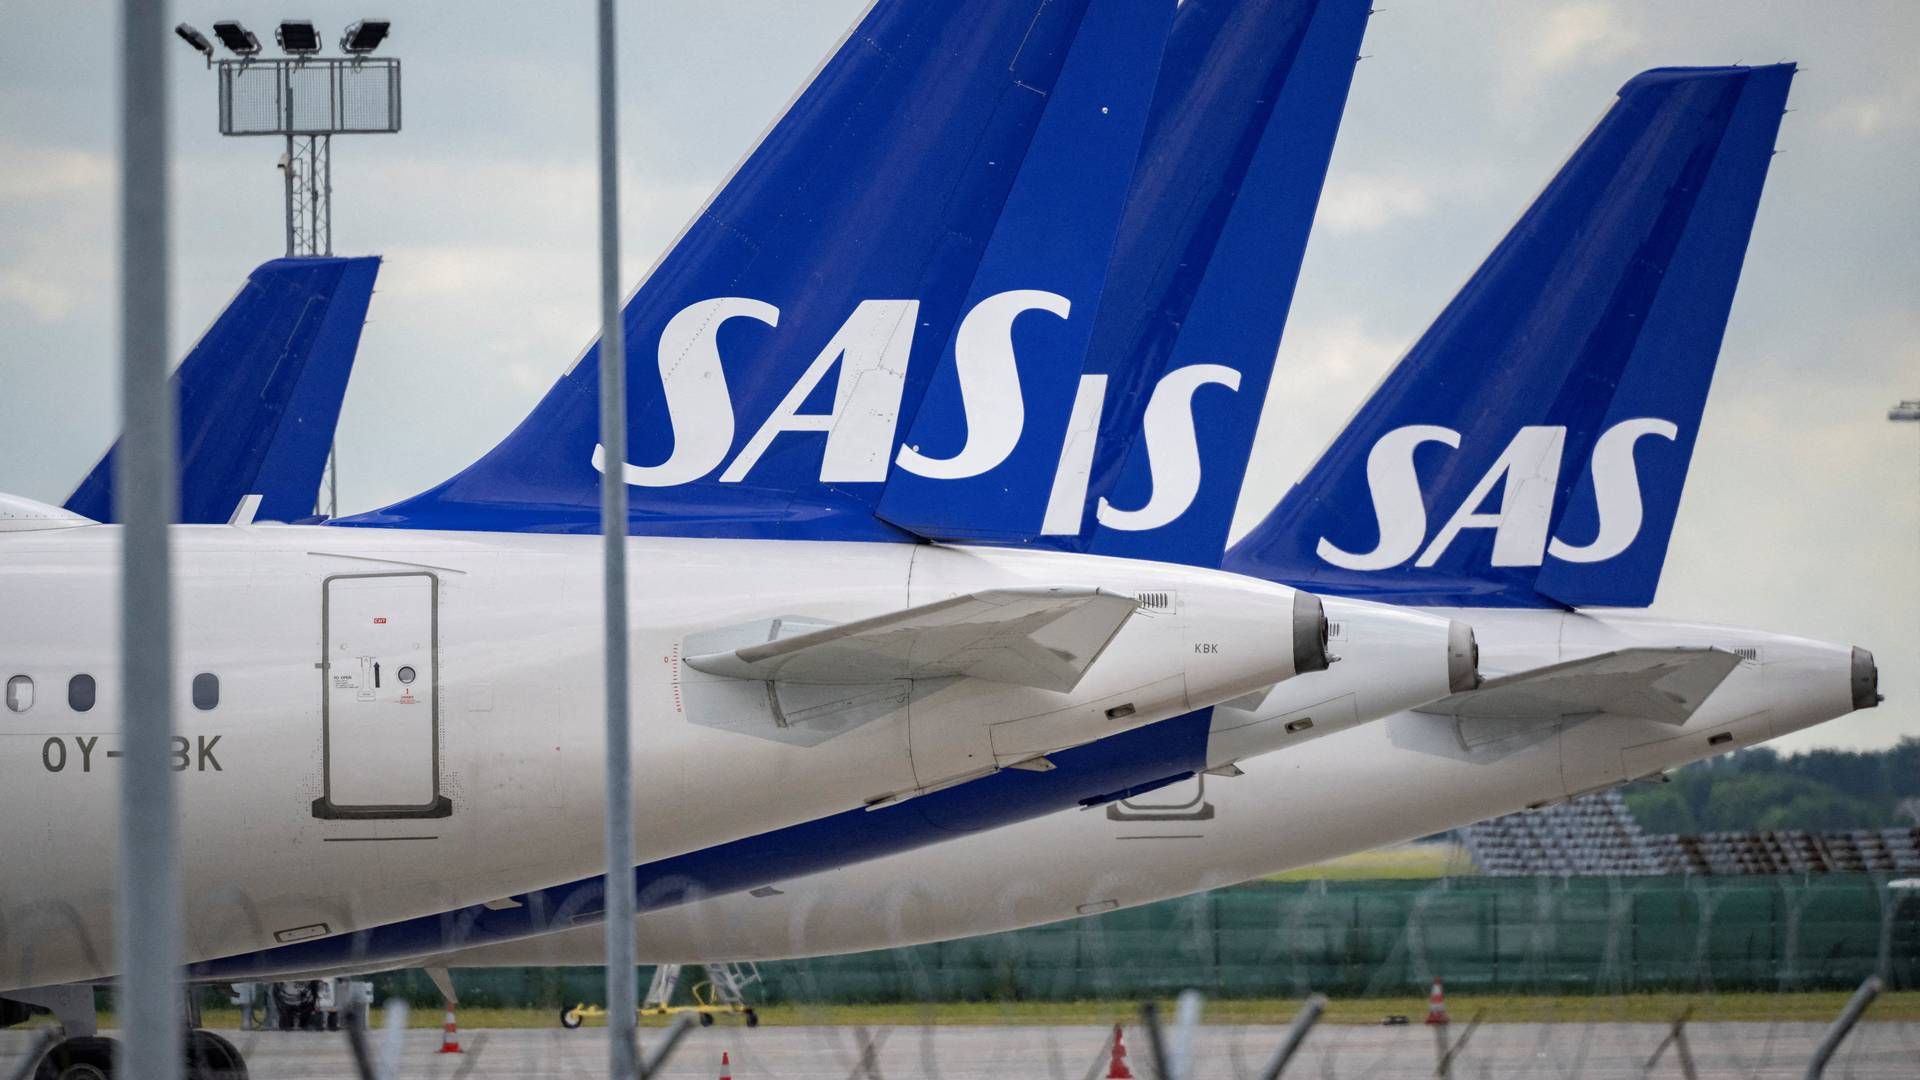 SAS-fly af typen A321 | Foto: Tt News Agency/Reuters/Ritzau Scanpix